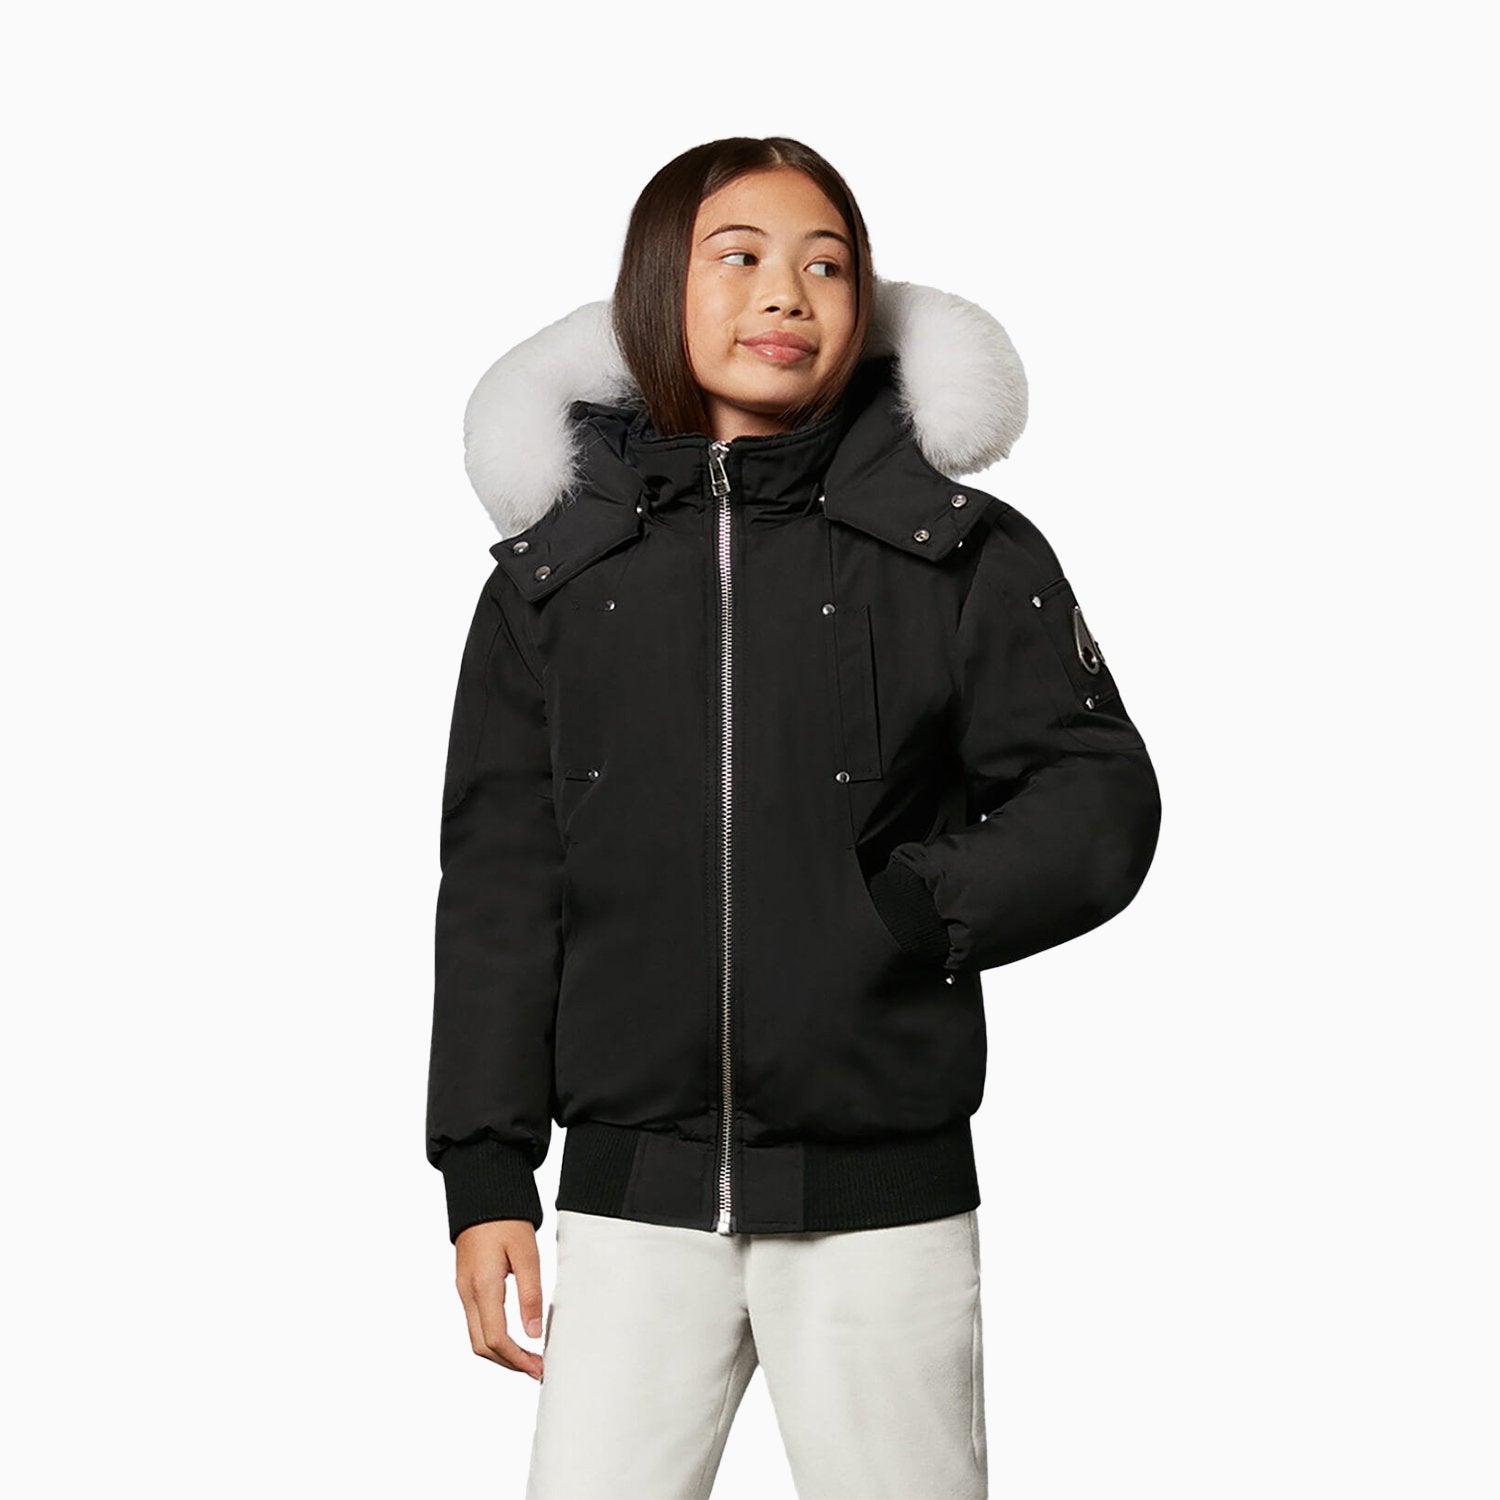 Moose Knuckles Kid's Bomber Jacket With Fur Hood - Color: Black white - Kids Premium Clothing -